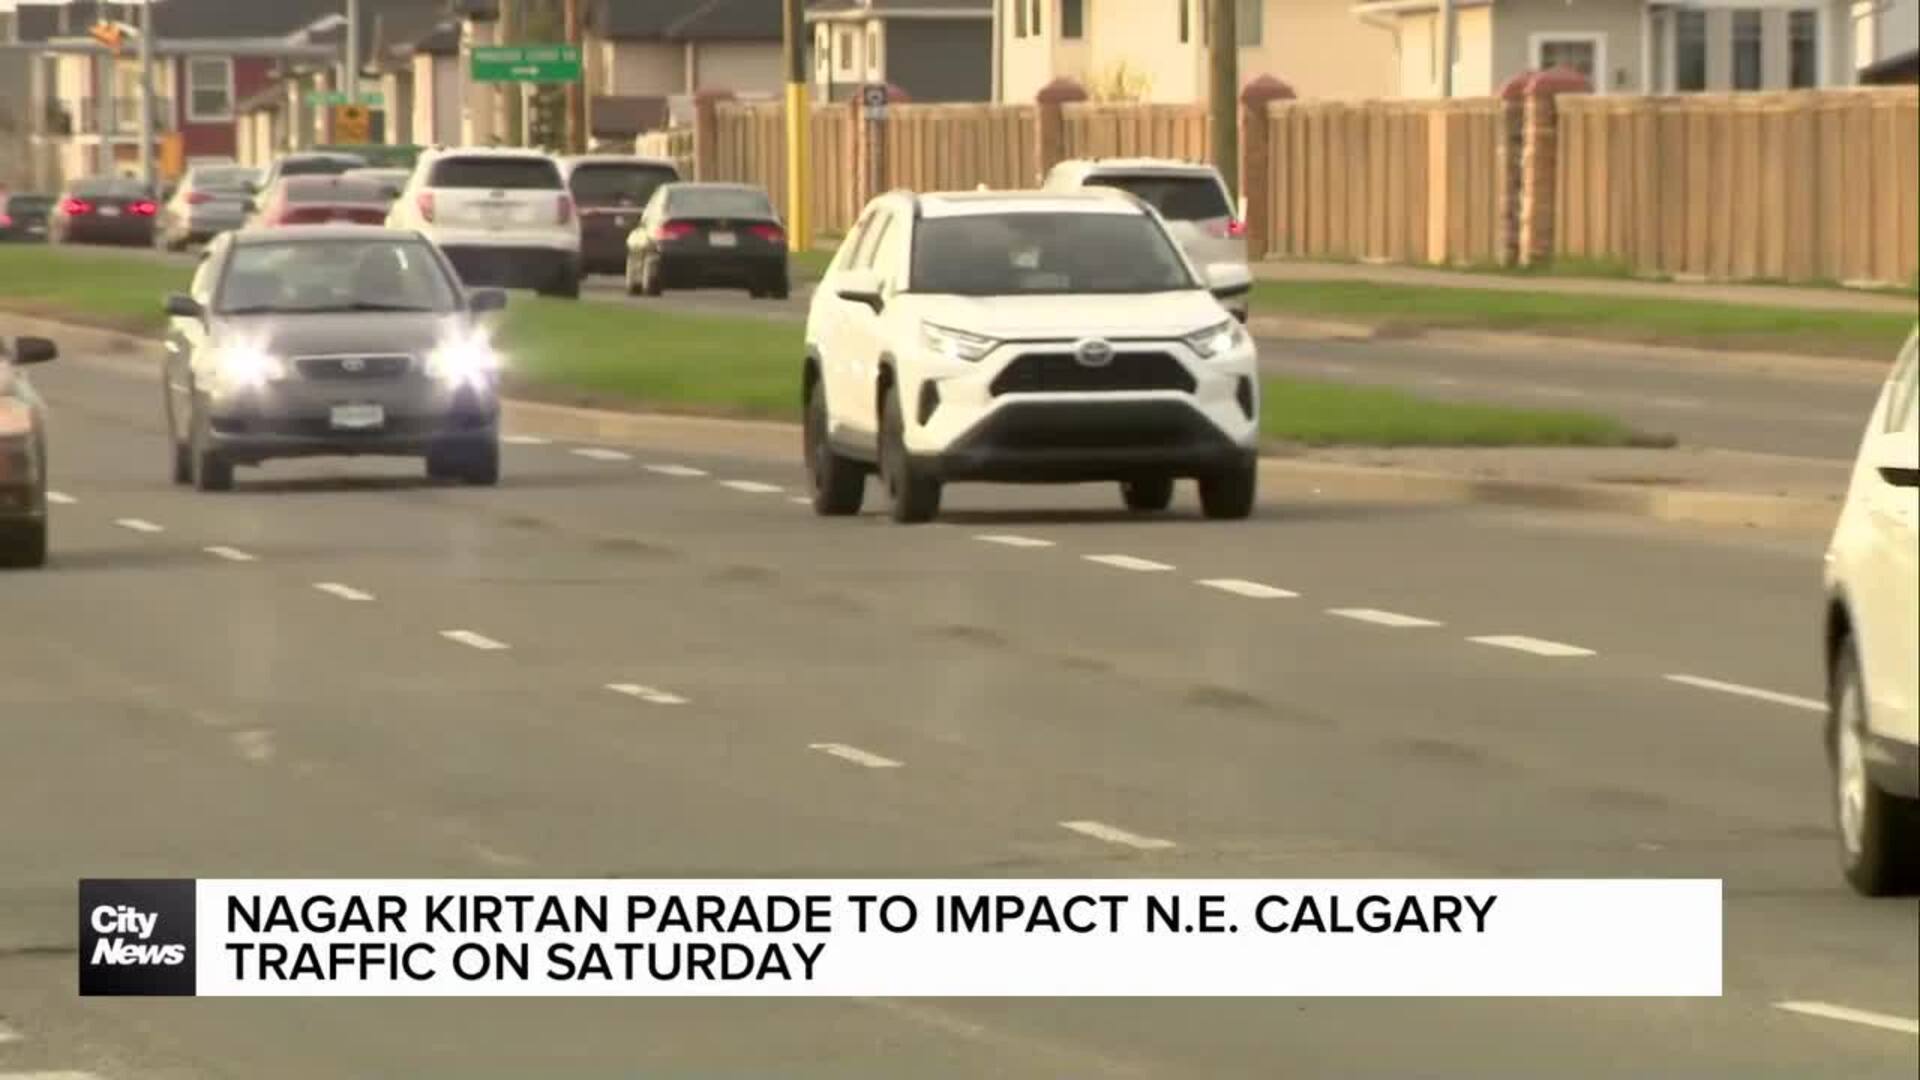 Nagar Kirtan parade to impact N.E. Calgary traffic on Saturday